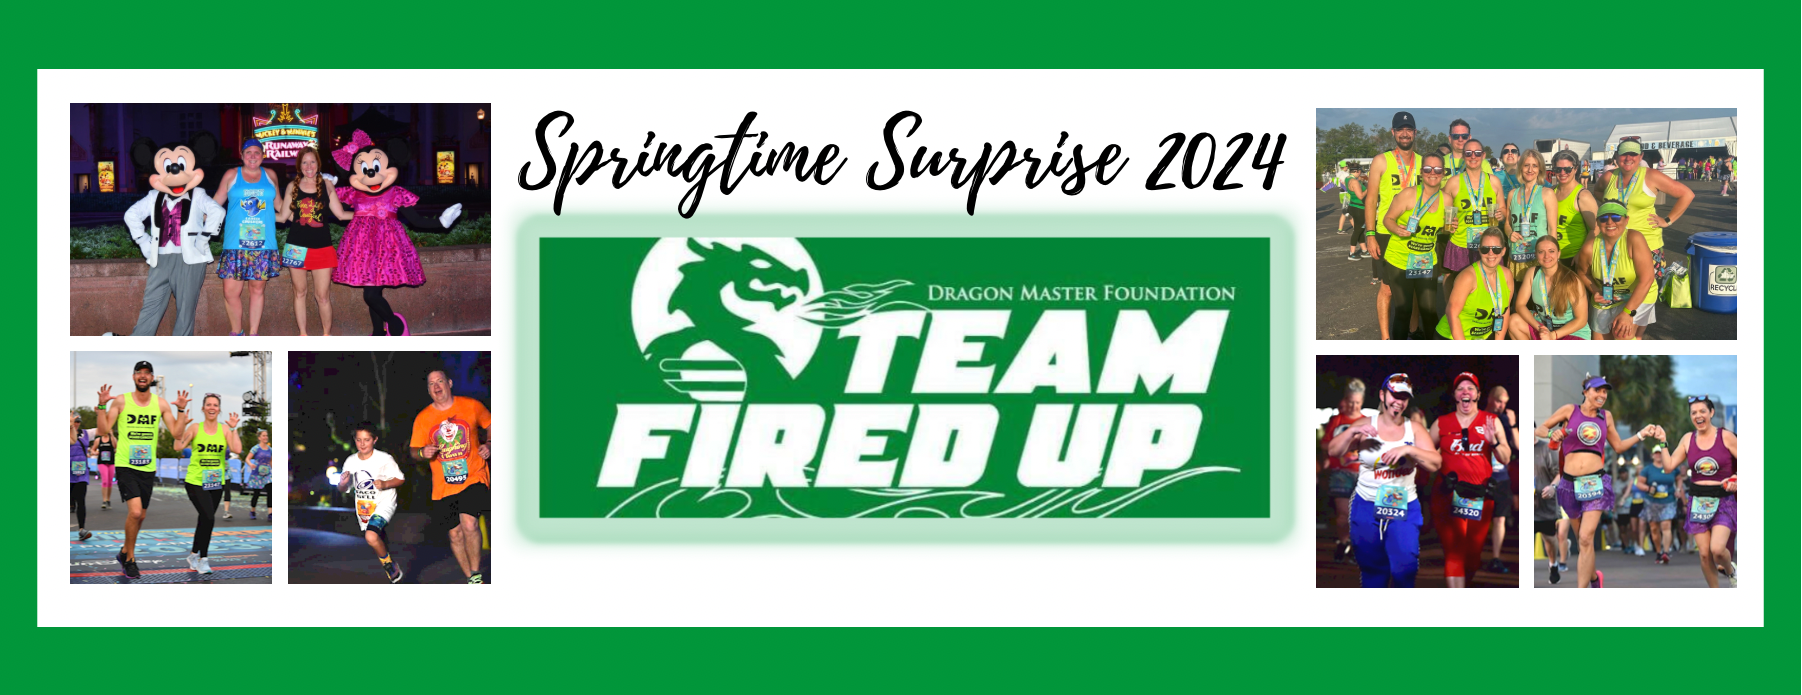 Team Fired Up - 2024 Disney Springtime Surprise